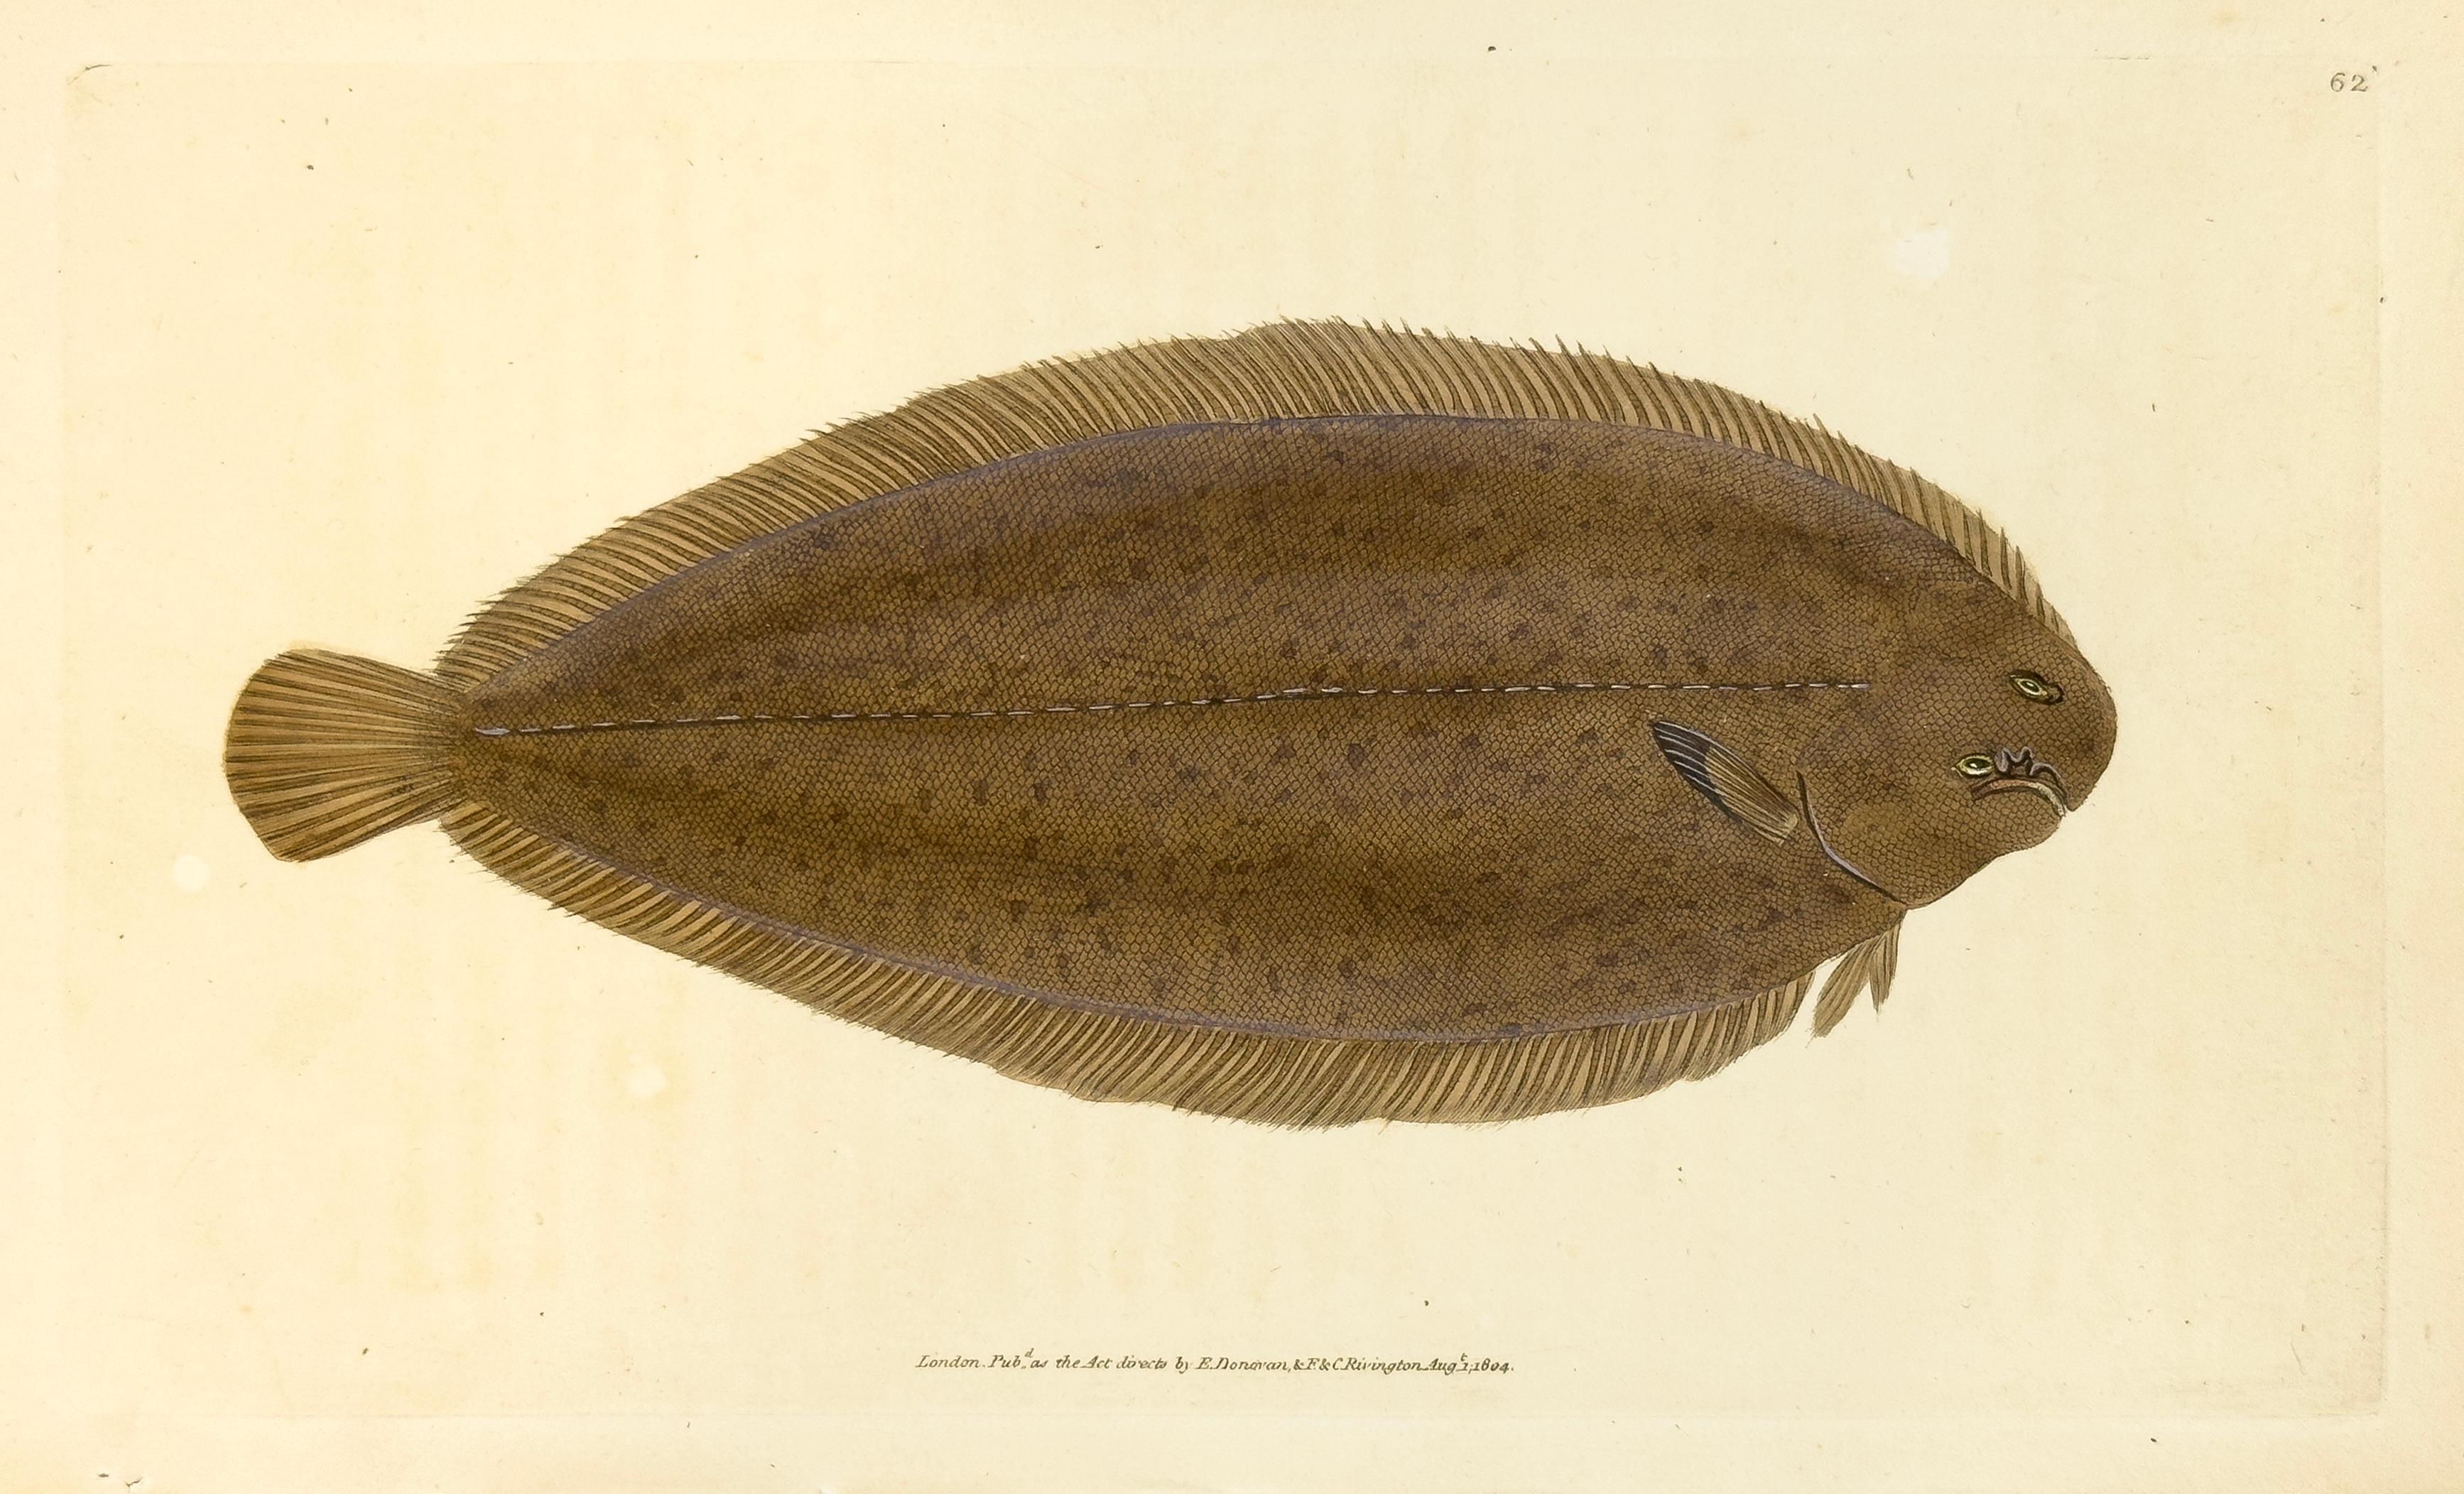 Edward Donovan Animal Print - 62: Pleuronectes solea, Common Sole